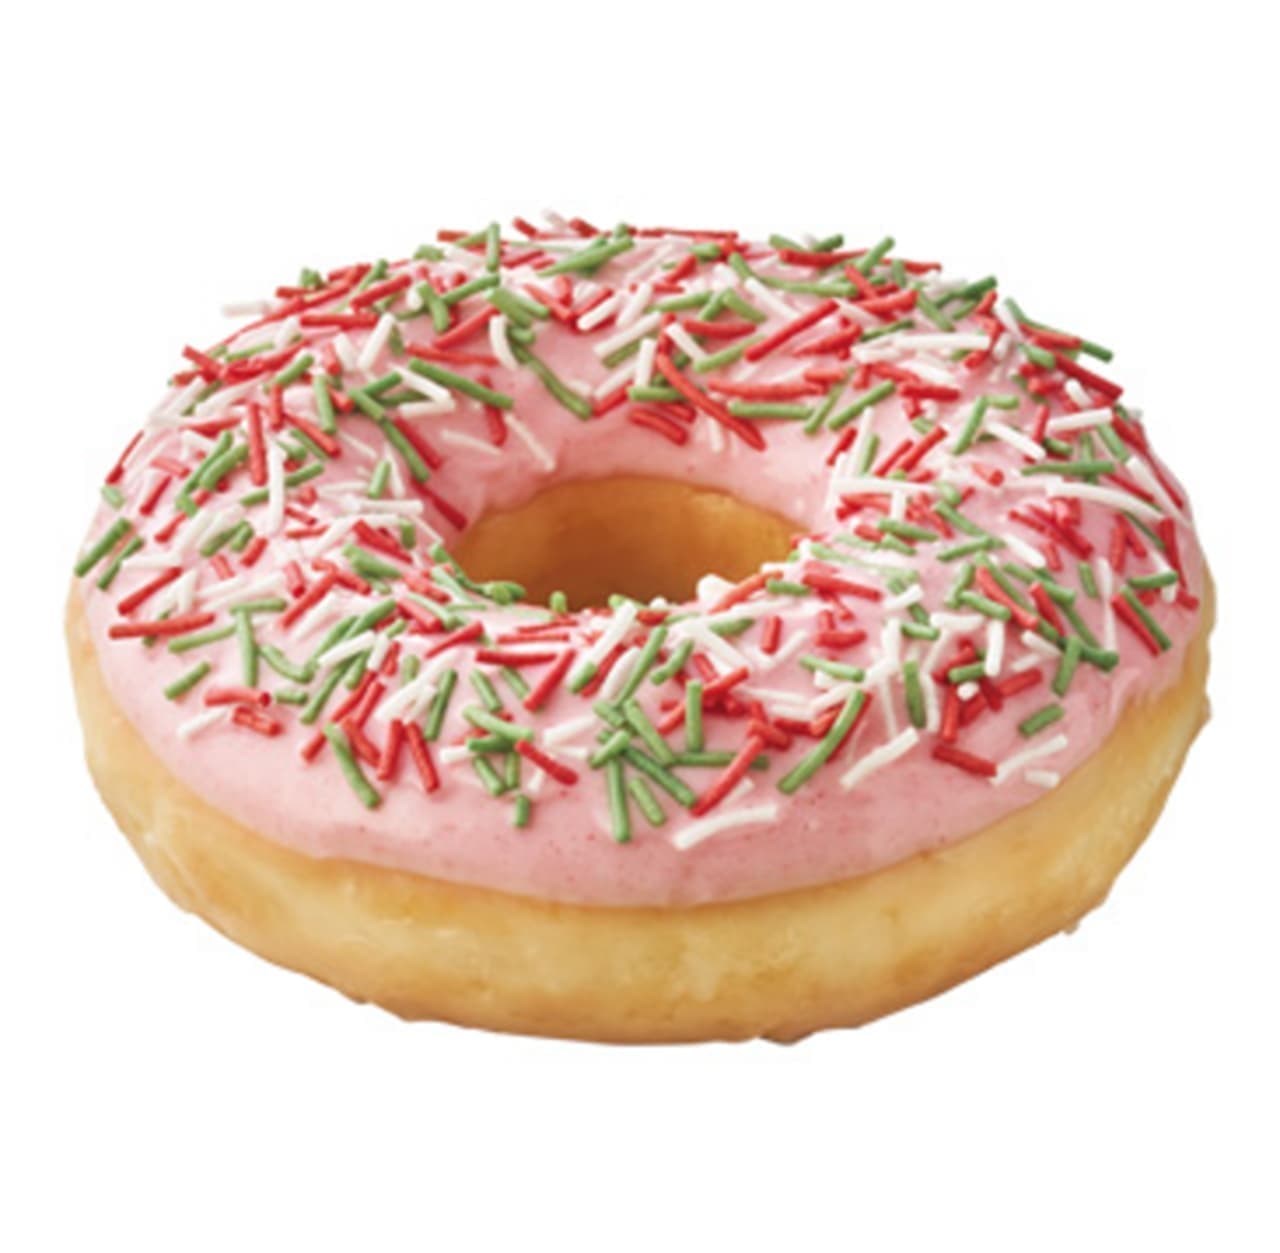 Summary of 5 kinds of KKD Christmas donuts